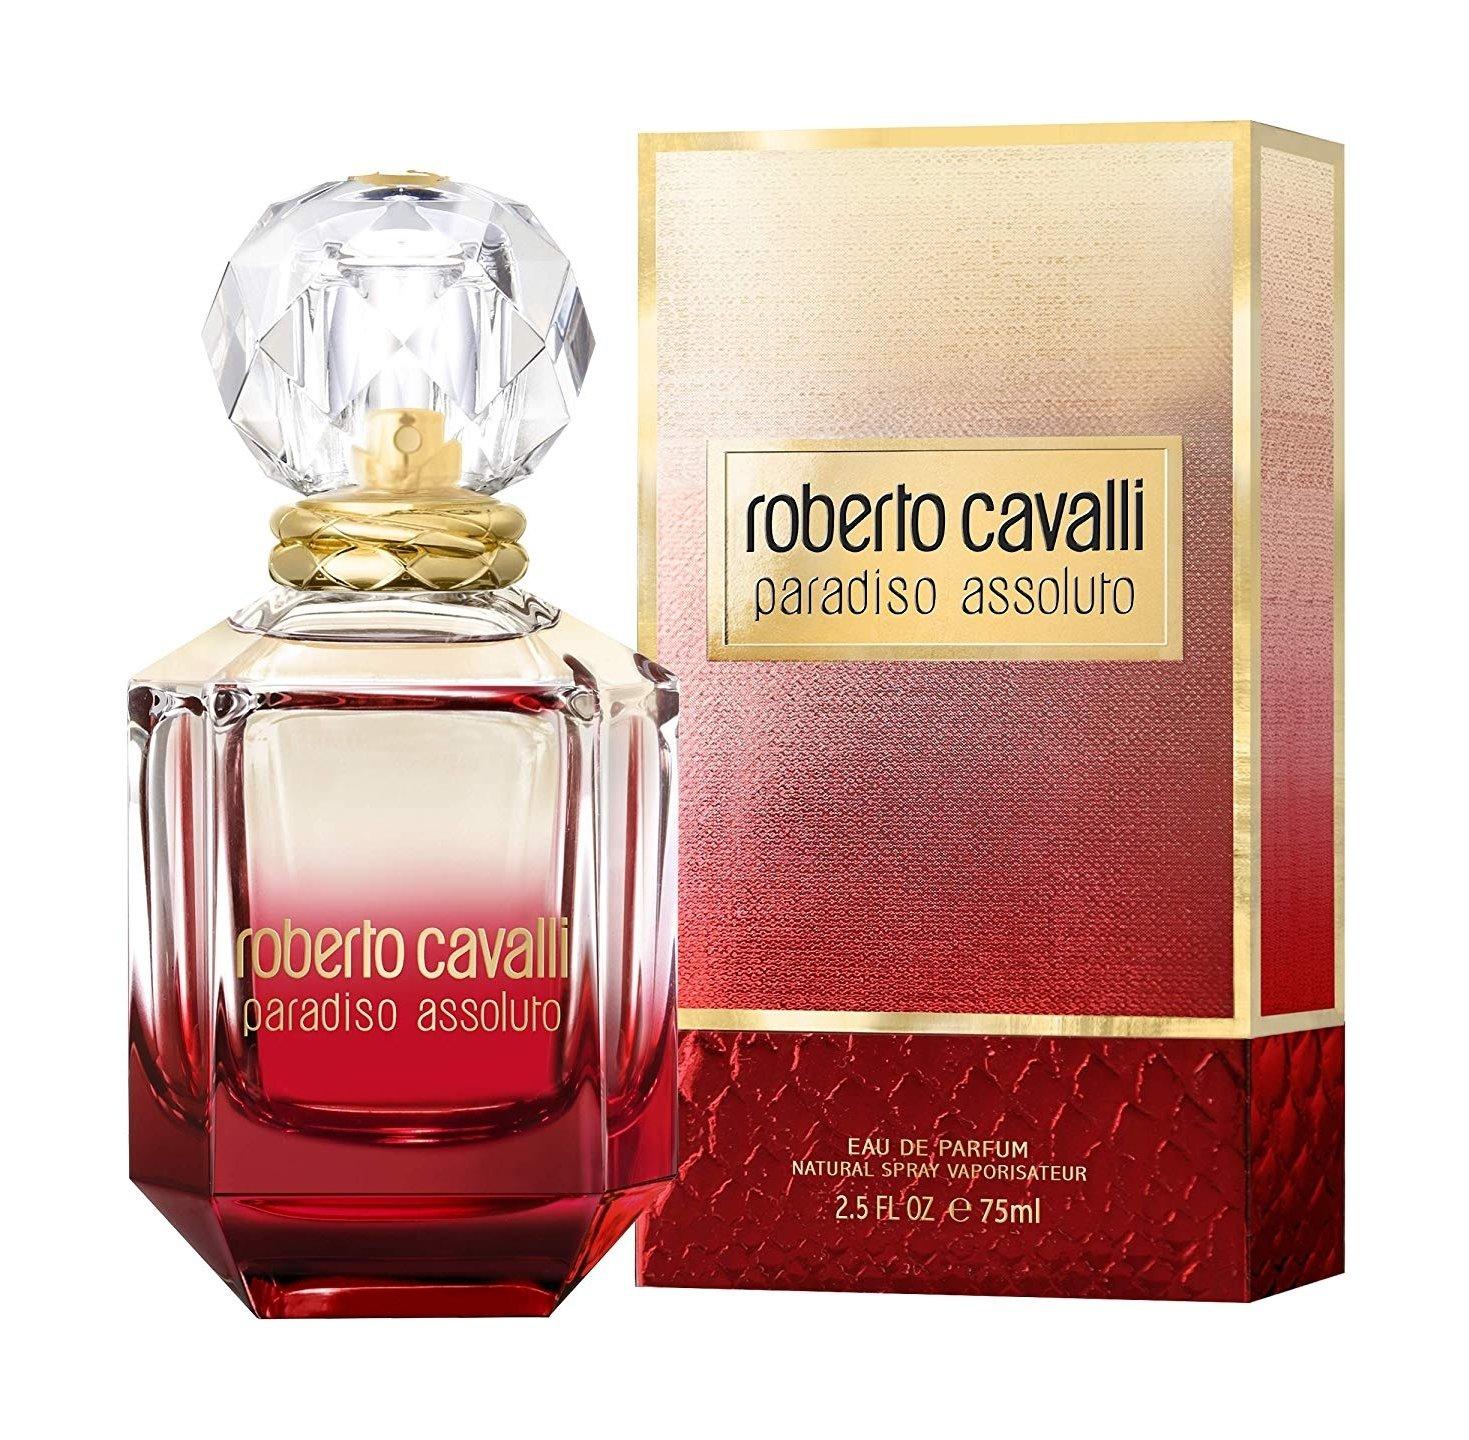 Buy Roberto cavalli paradiso assoluto 75ml eau de perfume - women in Kuwait